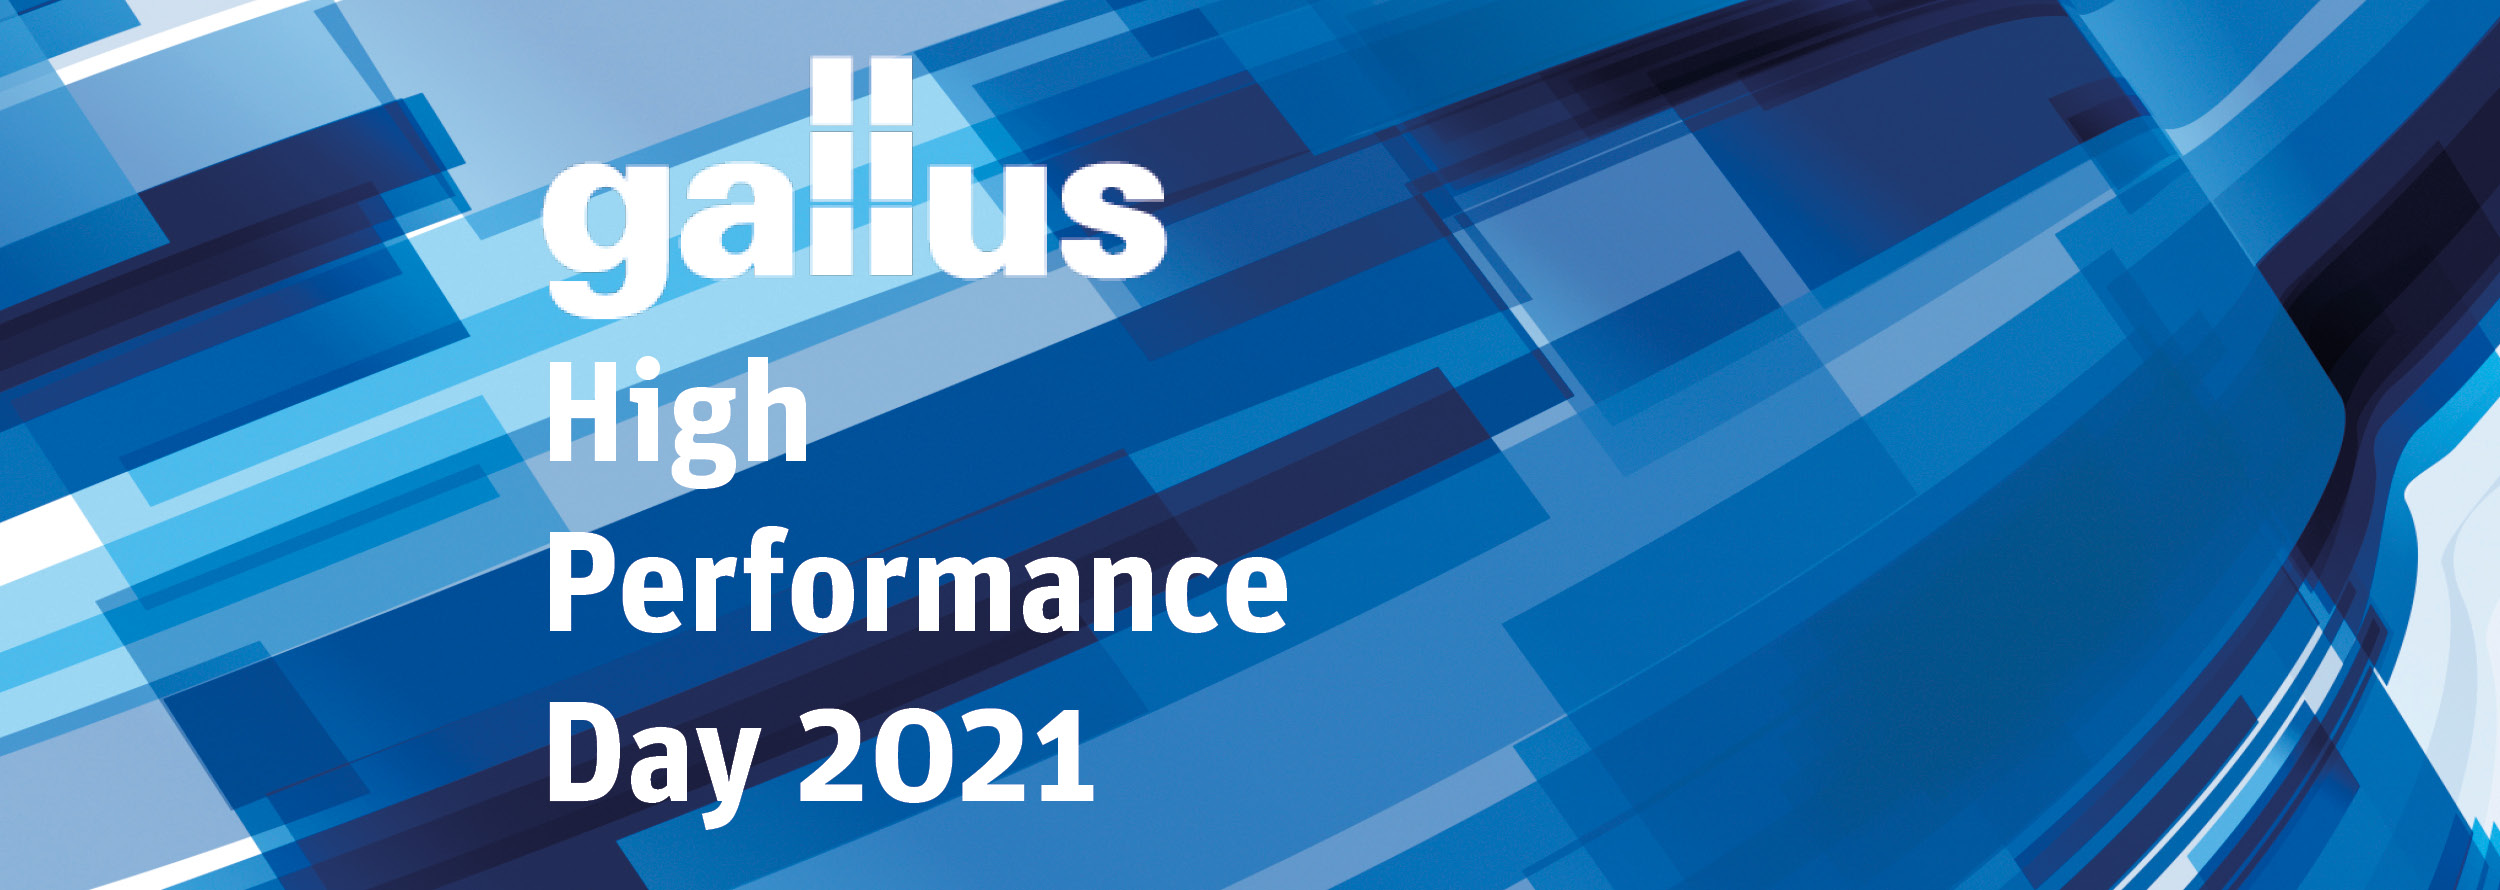  Gallus High Performance Day 2021